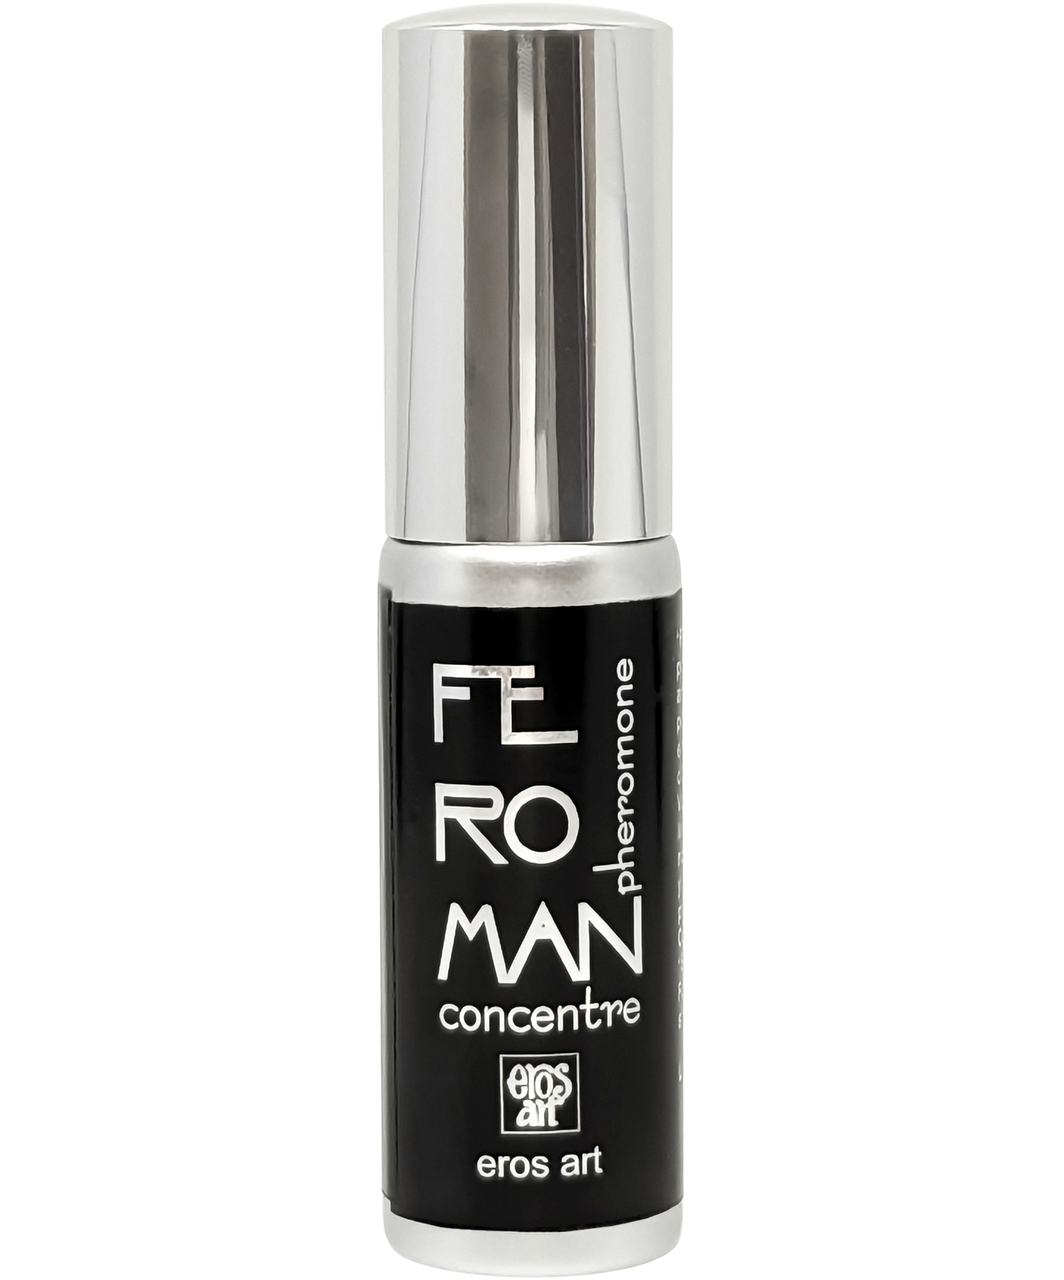 Eros-Art FeroMan Pheromone Concentrate (20 ml)